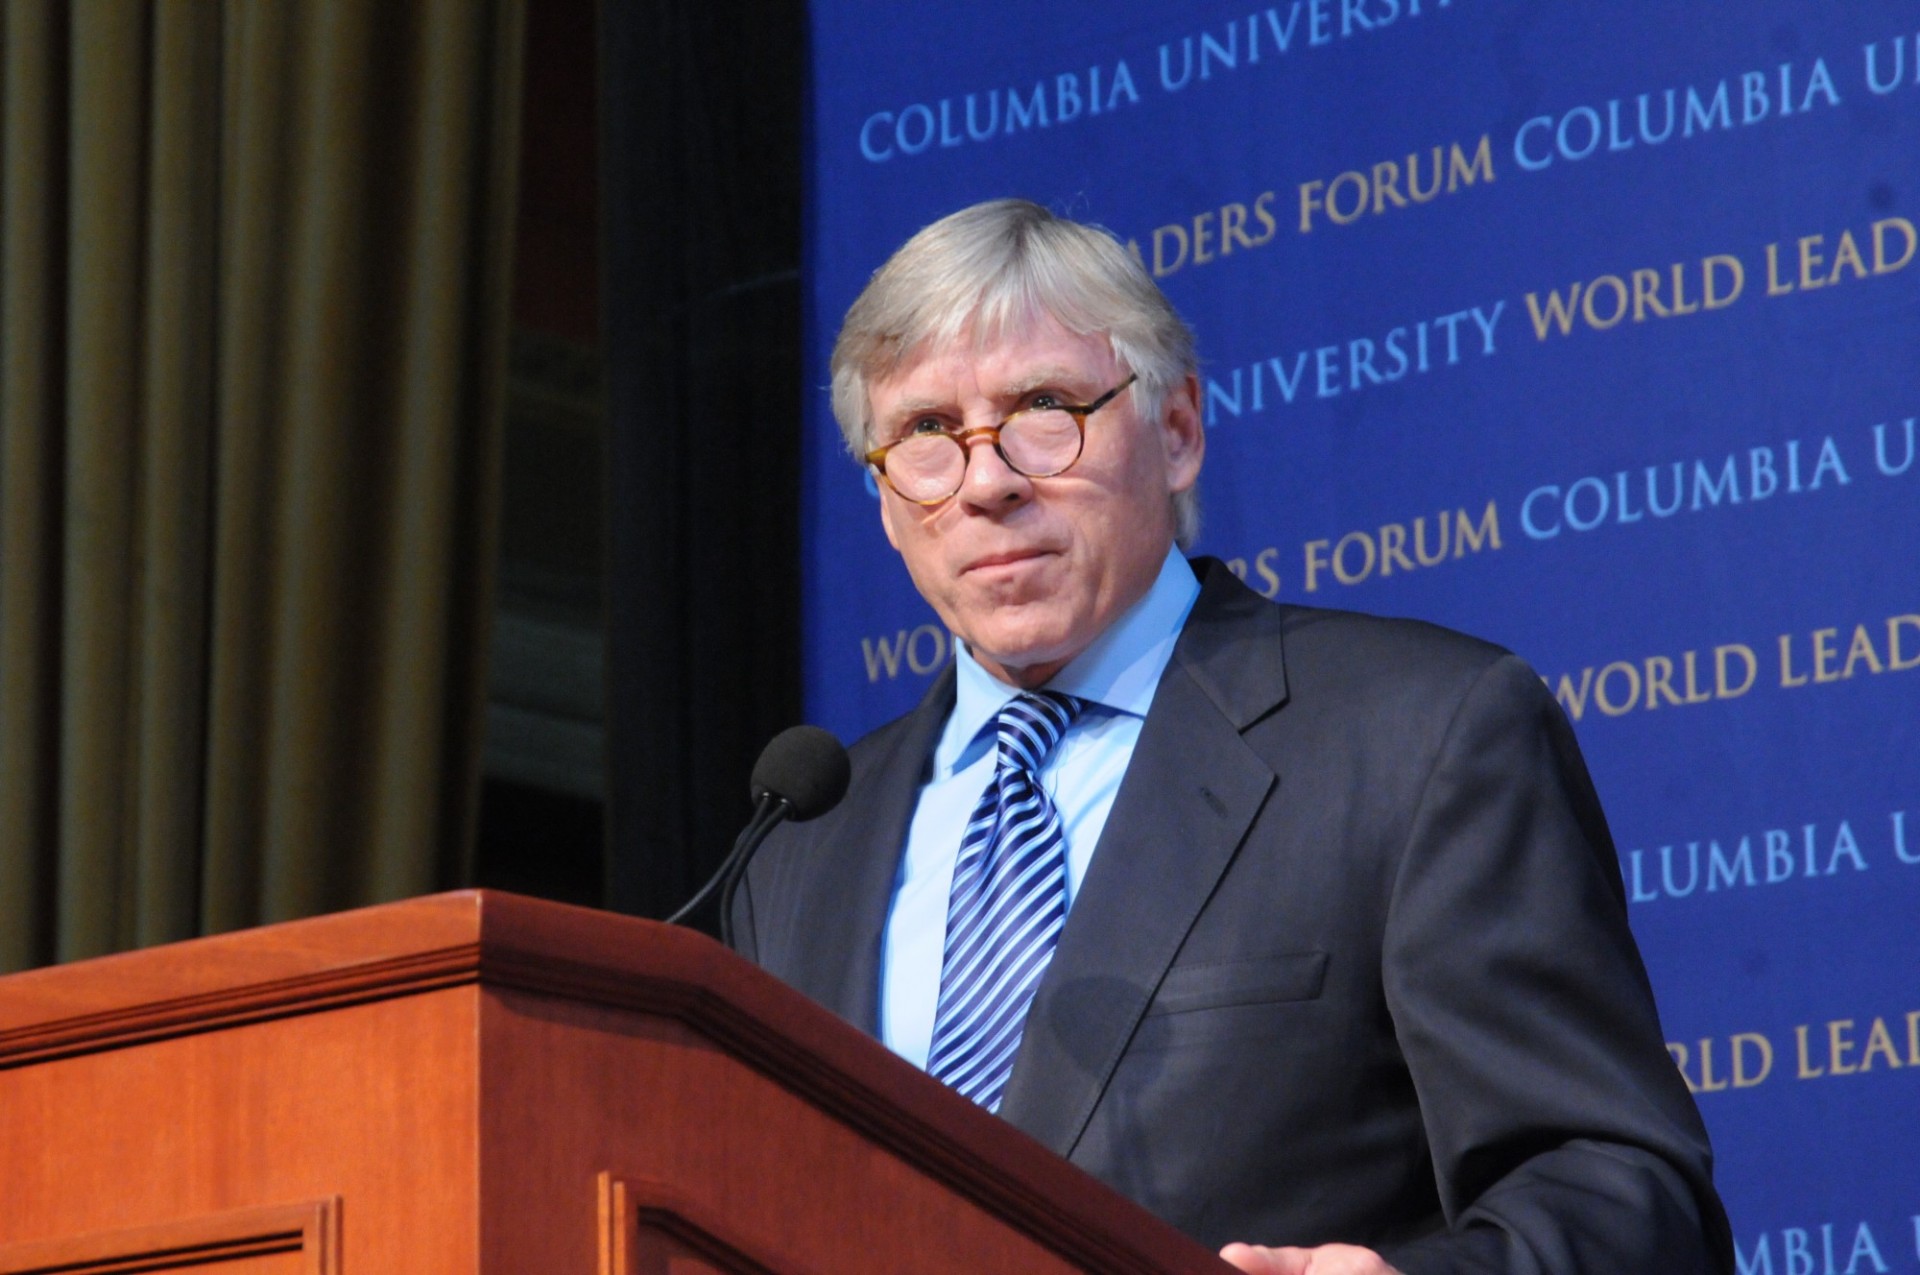 Lee C. Bollinger, President of Columbia University in the City of New York